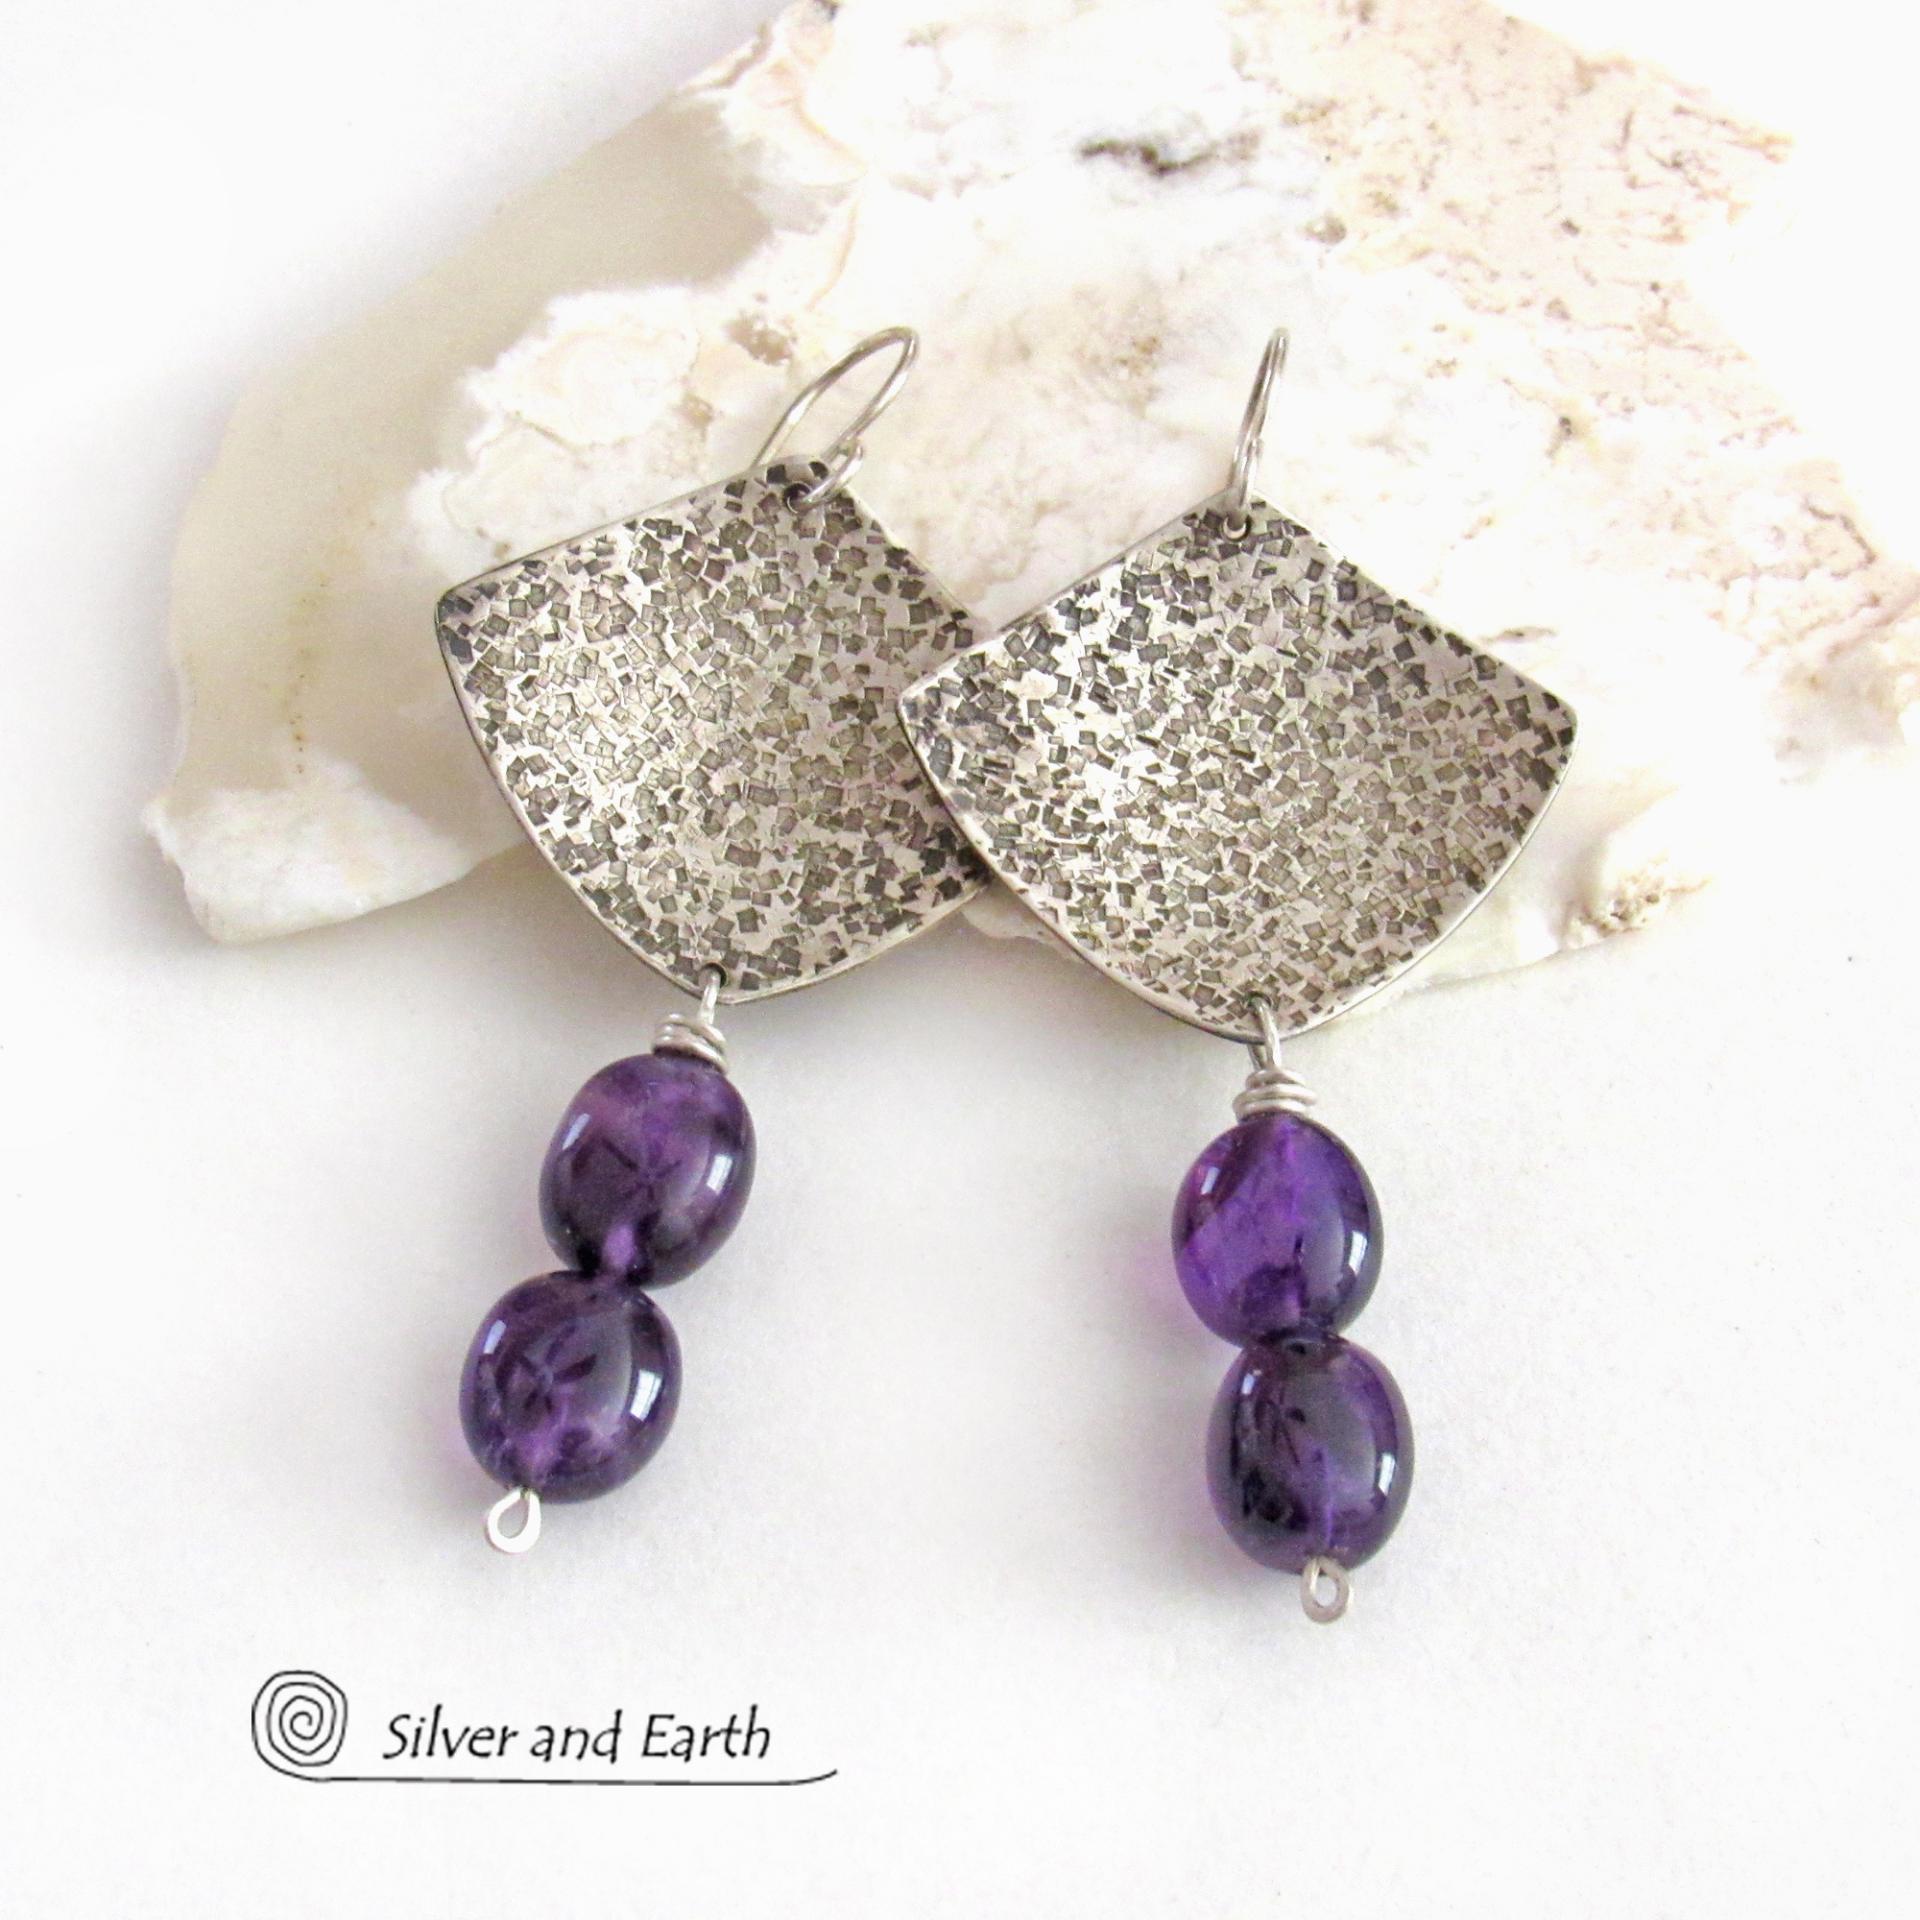 Sterling Silver Earrings with Purple Amethyst Gemstones - February Birthstone Jewelry Gifts for Women